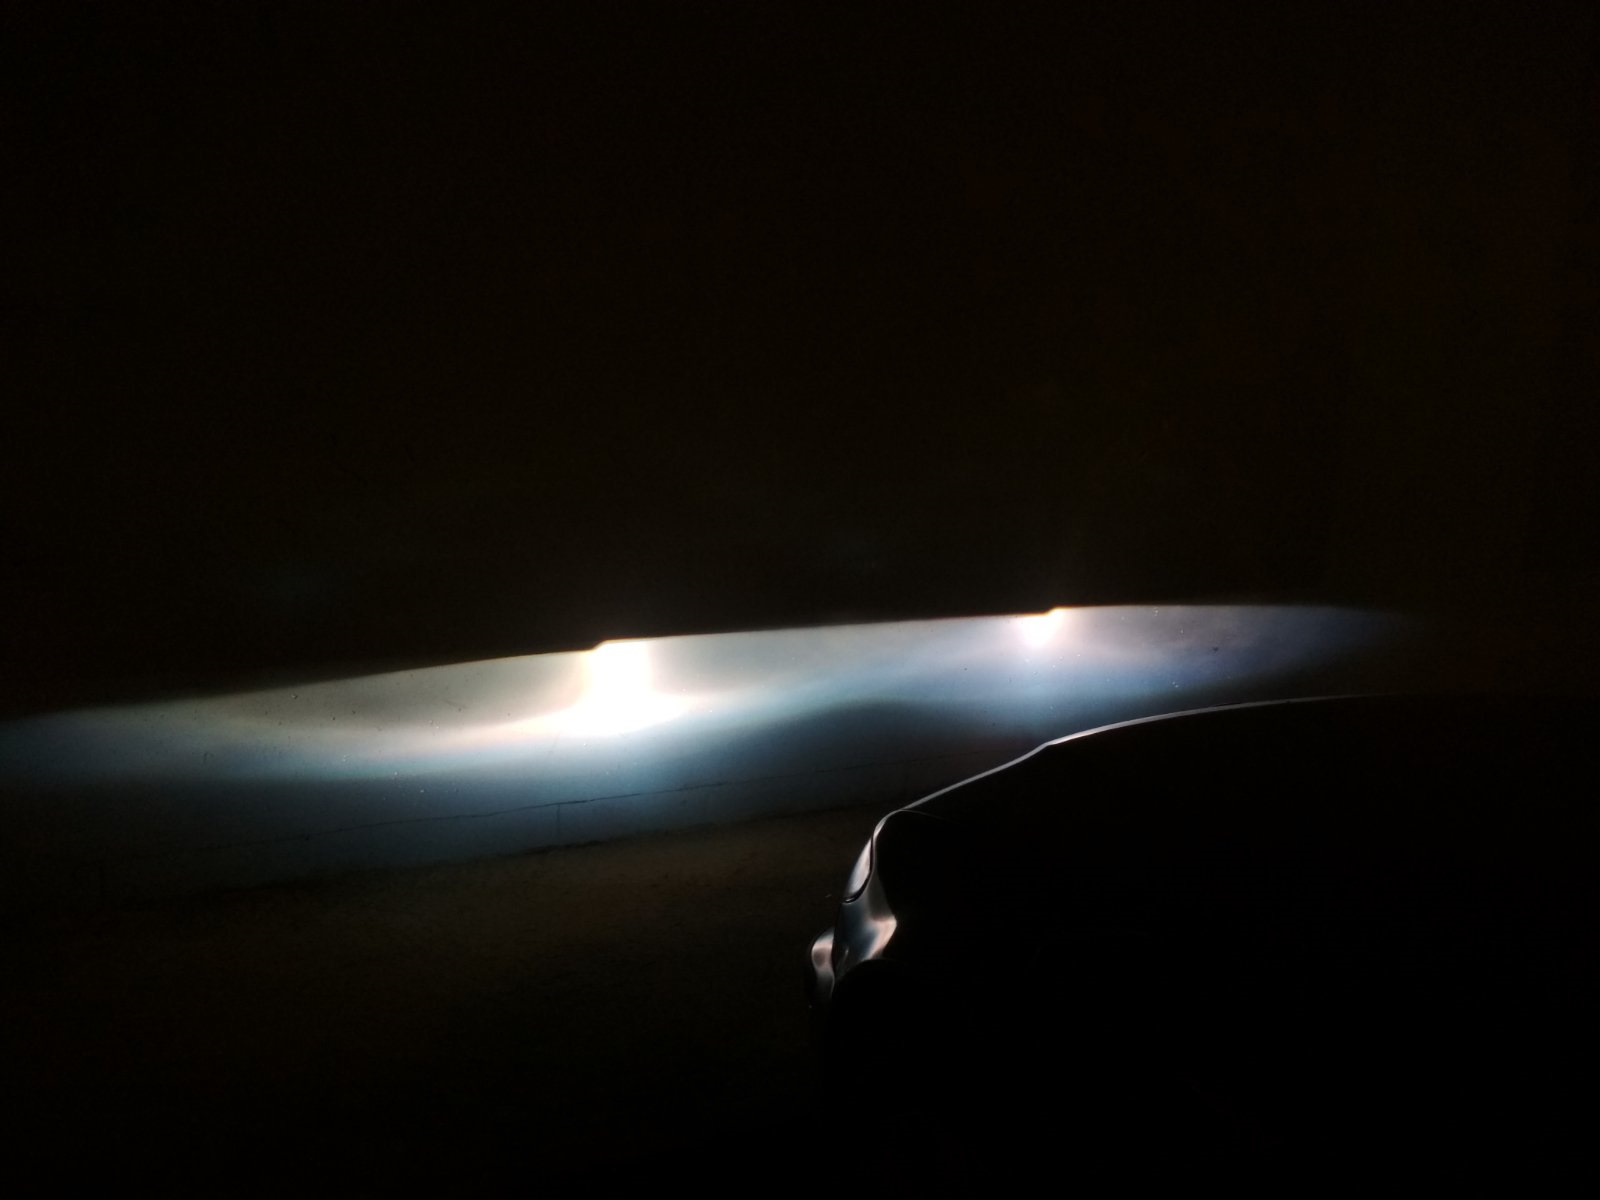 Ксеноновый свет фар. Солярис 2 свет фар галоген. Ксенон на ГАЗ 3110. Фары светят ночью.